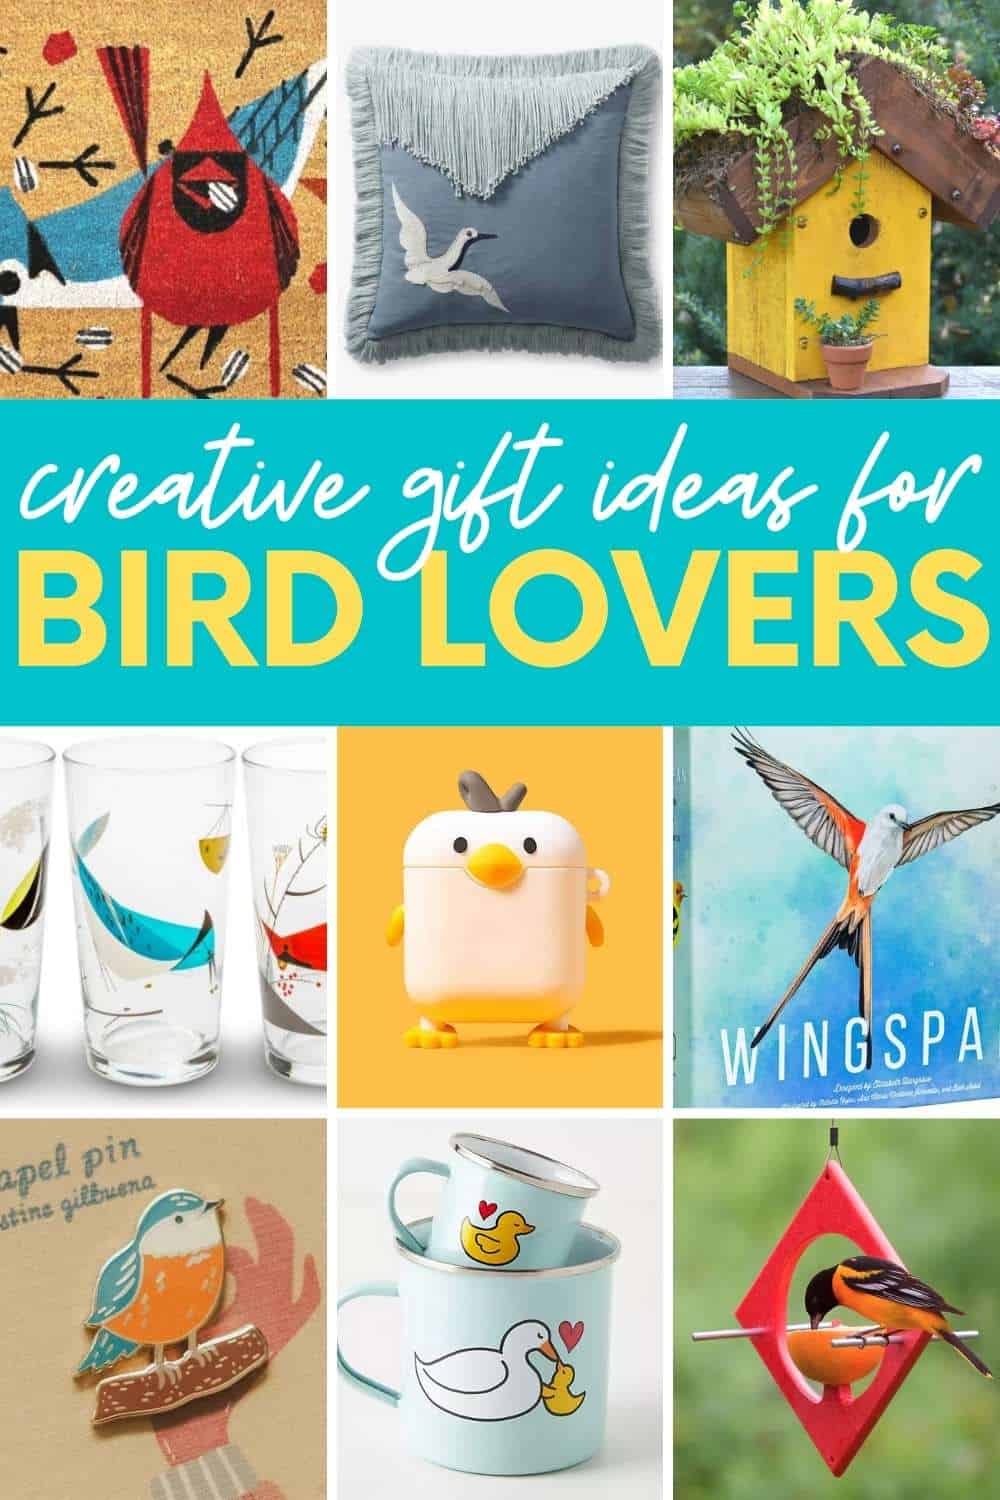 Rusty Metal LOVE BIRDS Garden decoration Christmas Gift Ideas Unique Bird  Lovers | eBay